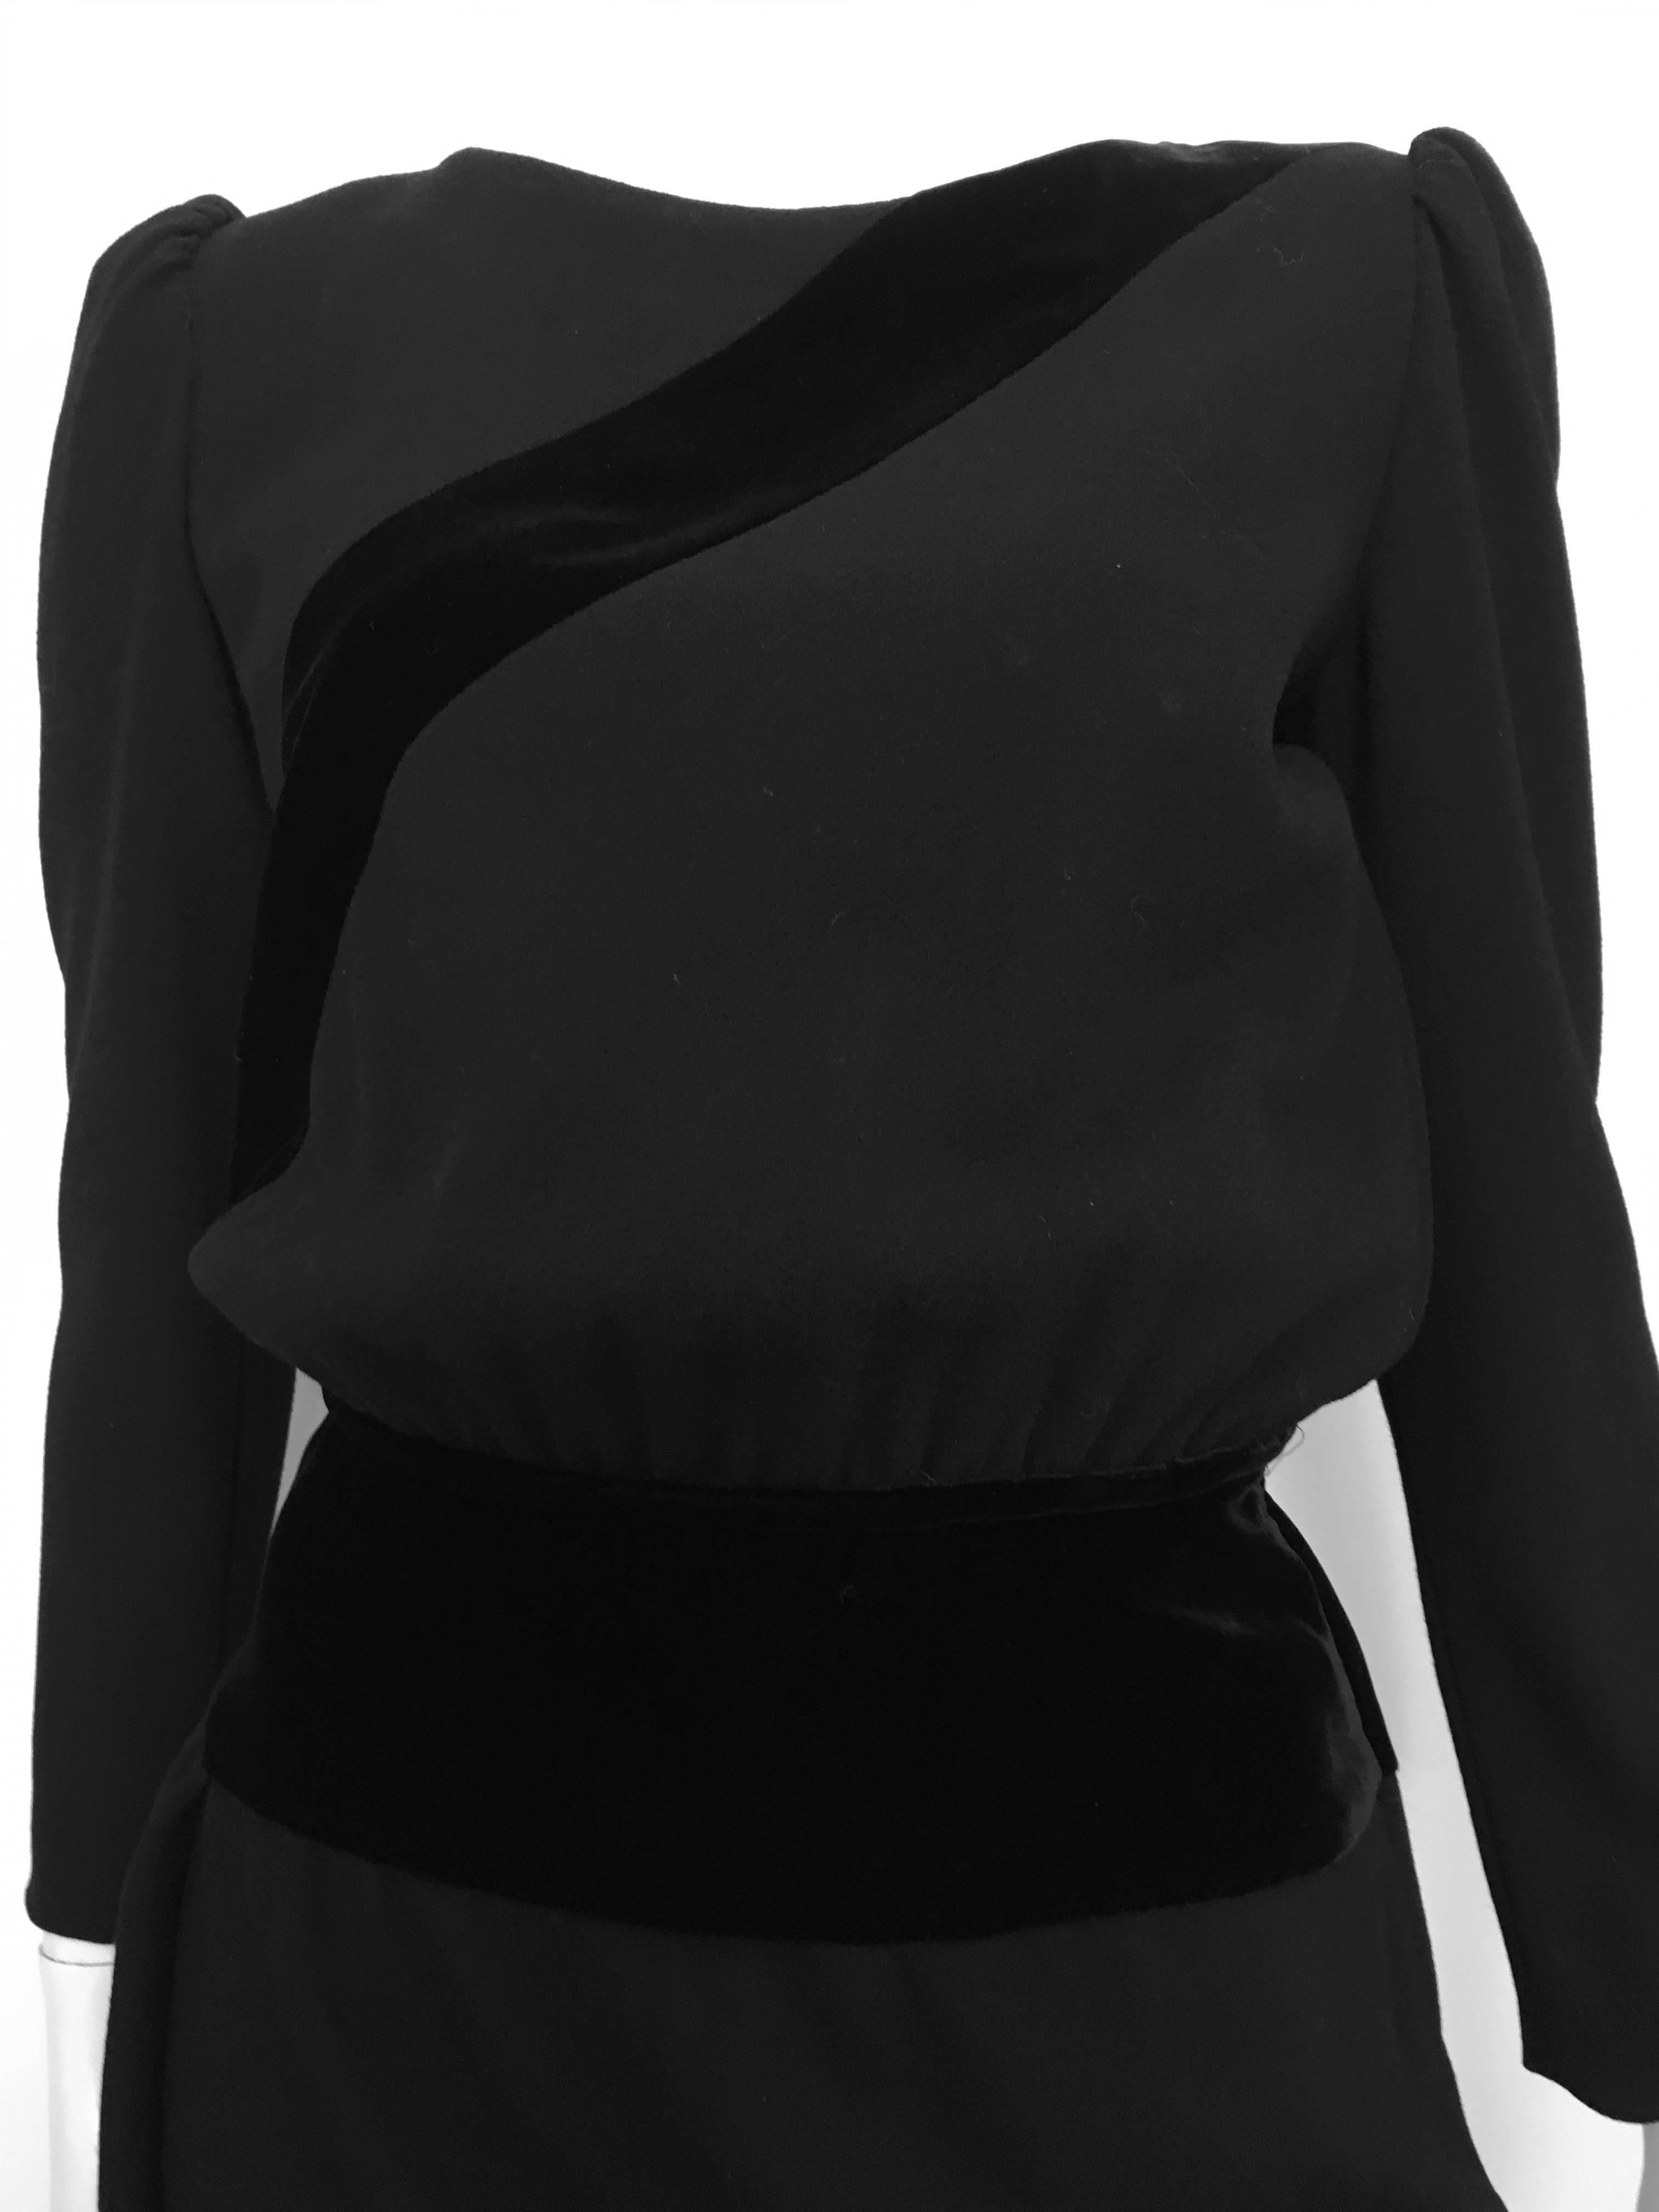 Women's or Men's Valentino Boutique Black Wool Crepe Dress Size 6, 1980s